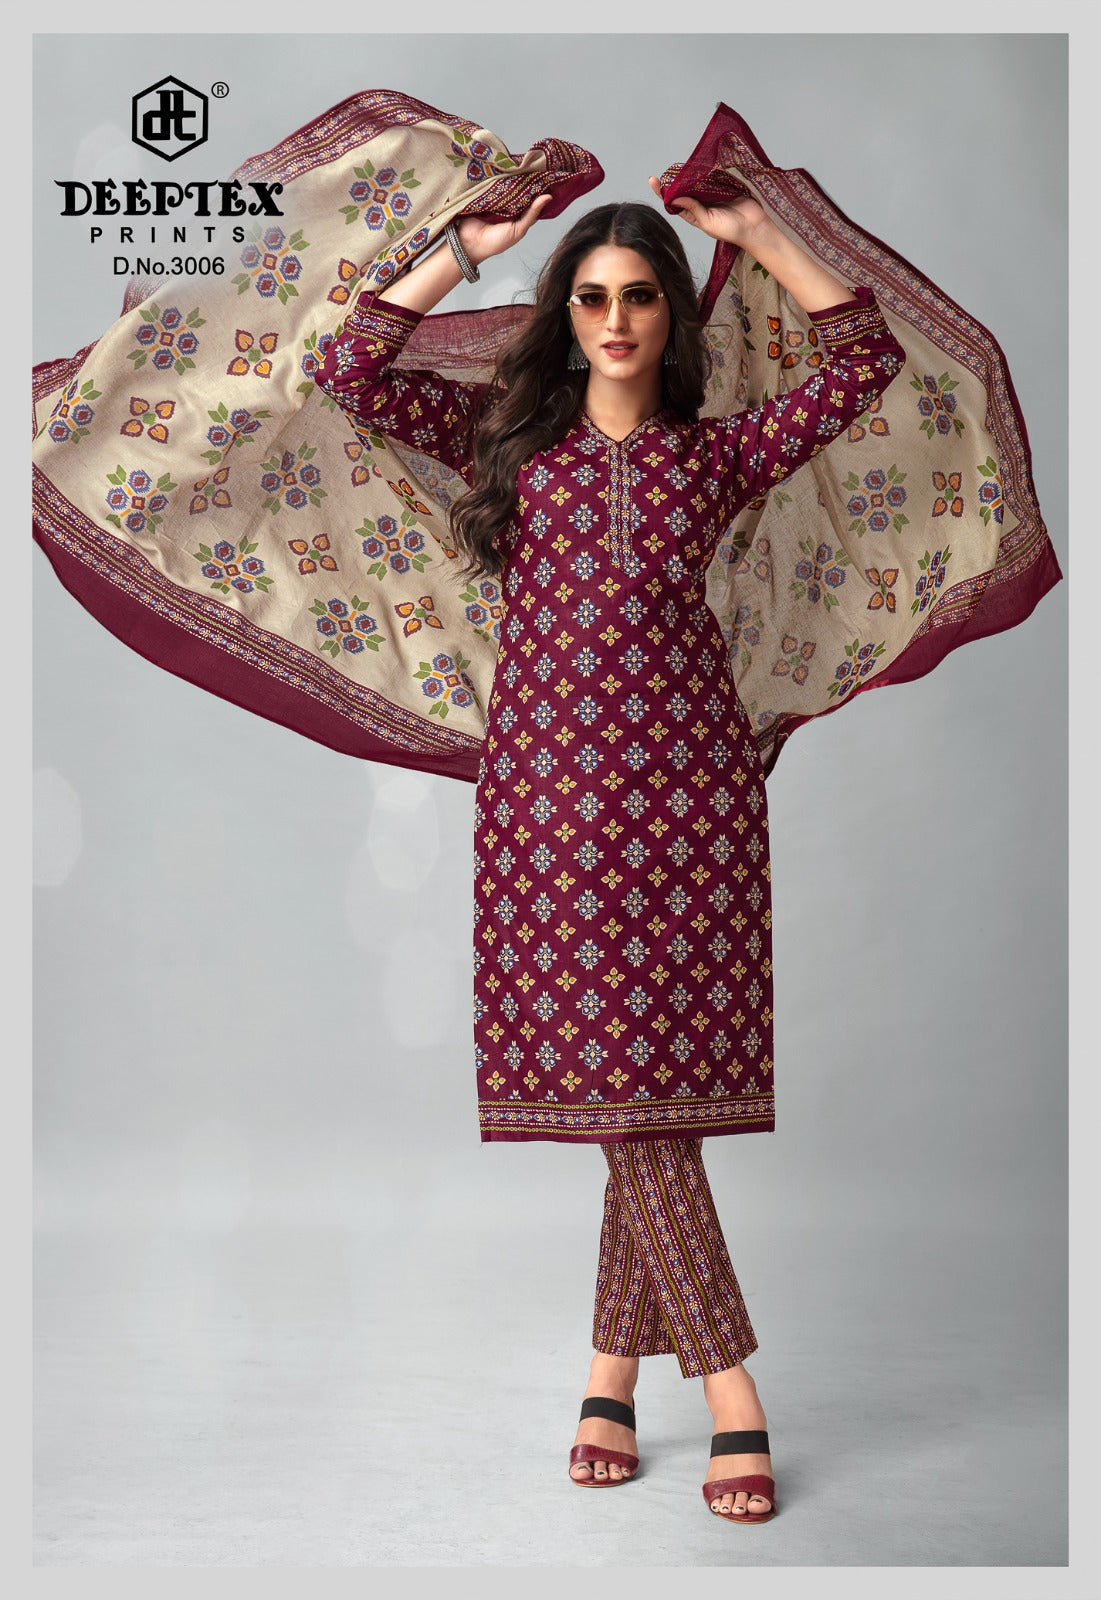 Deeptex printsss chief guest vol 30 cotton printed salwar suits wholesaler in jetpur - jilaniwholesalesuit